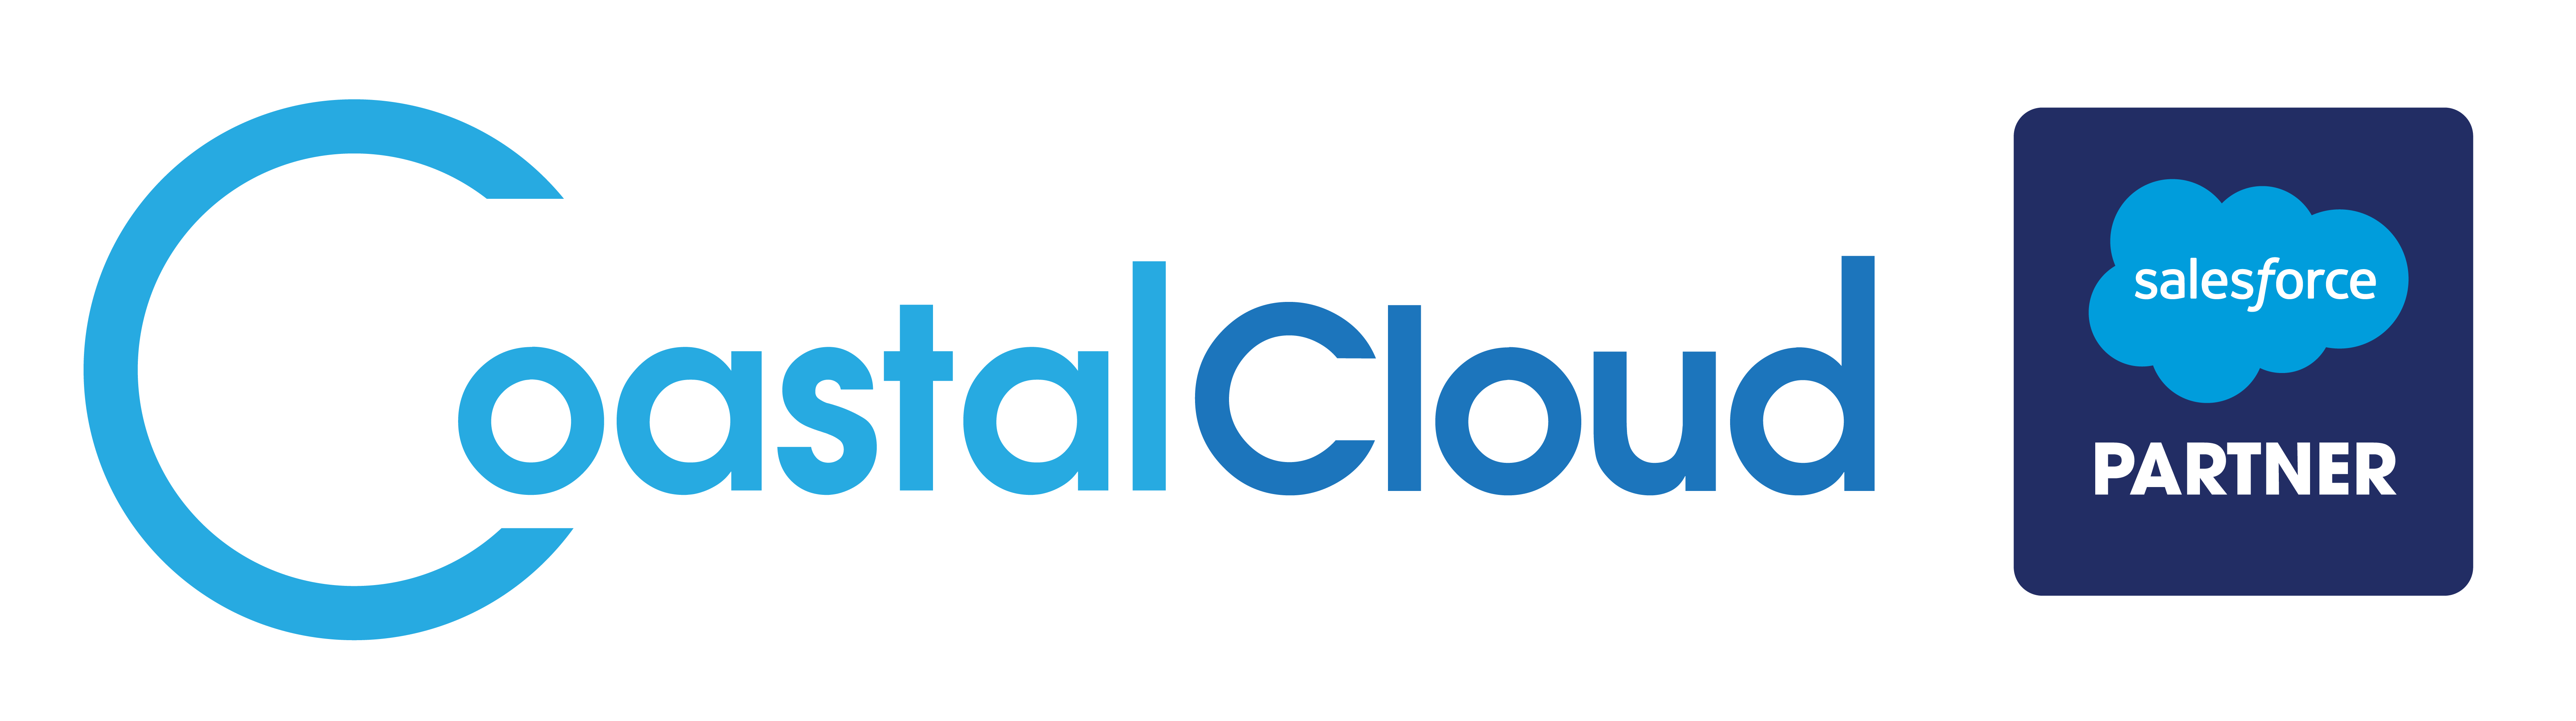 "Coastal Cloud a Salesforce partner"